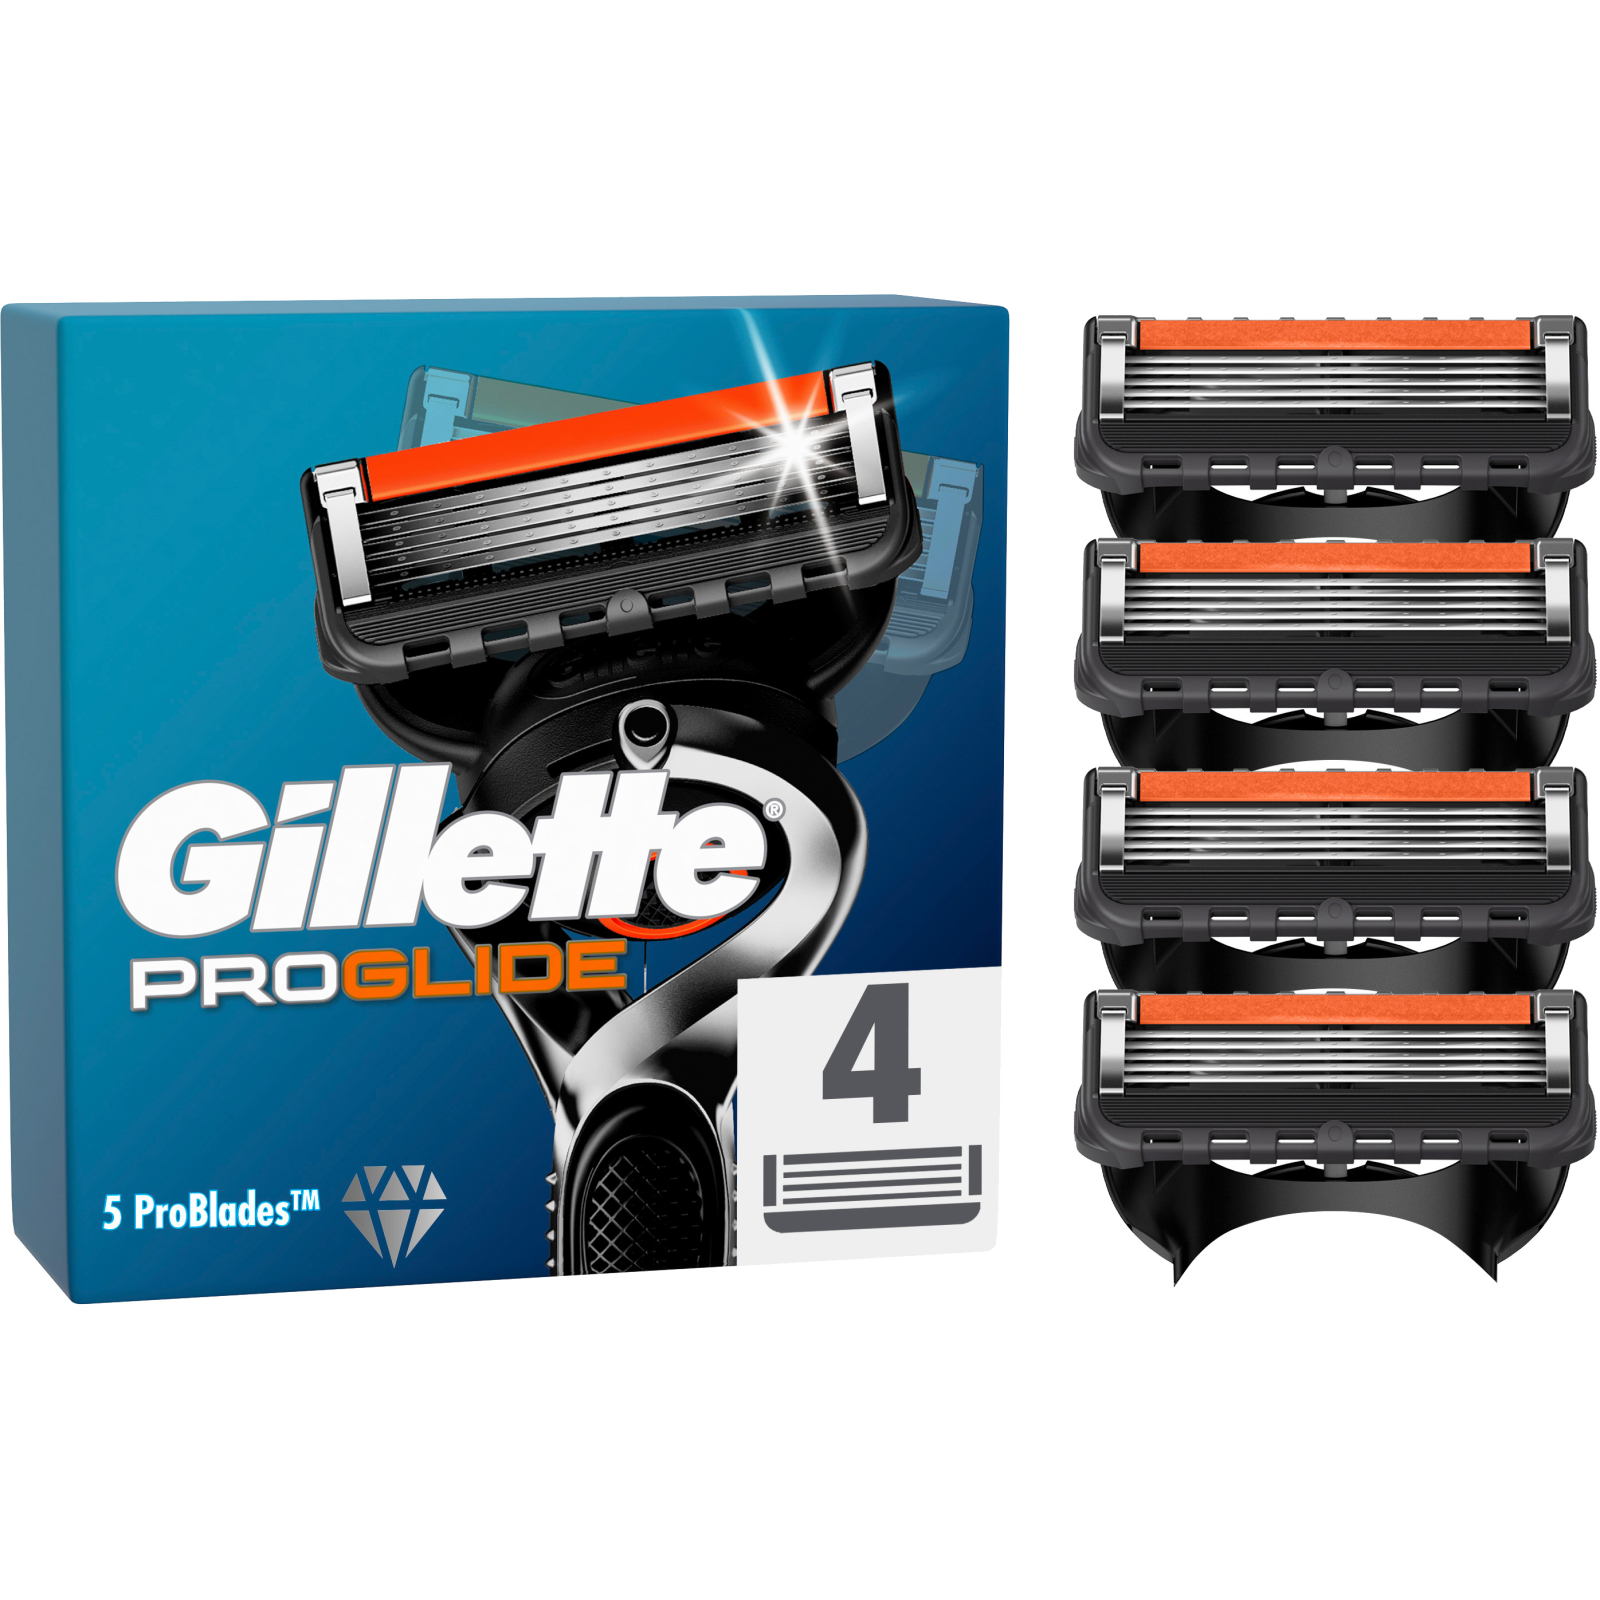 Змінні касети Gillette Fusion ProGlide 2 шт. (7702018085897)